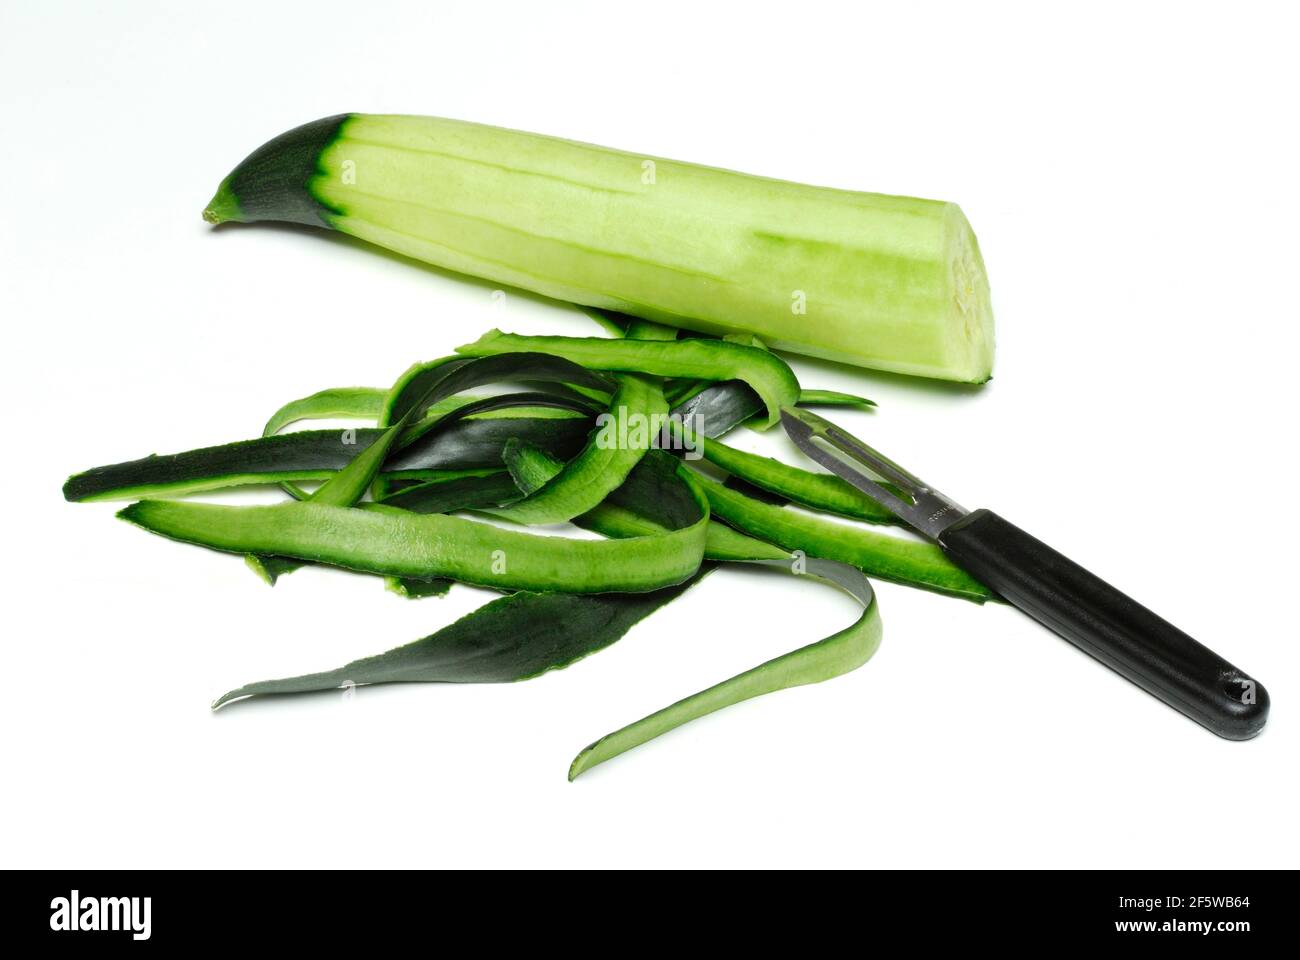 https://c8.alamy.com/comp/2F5WB64/snake-cucumber-cucumis-sativus-cucumber-peeler-cucumber-peeler-2F5WB64.jpg